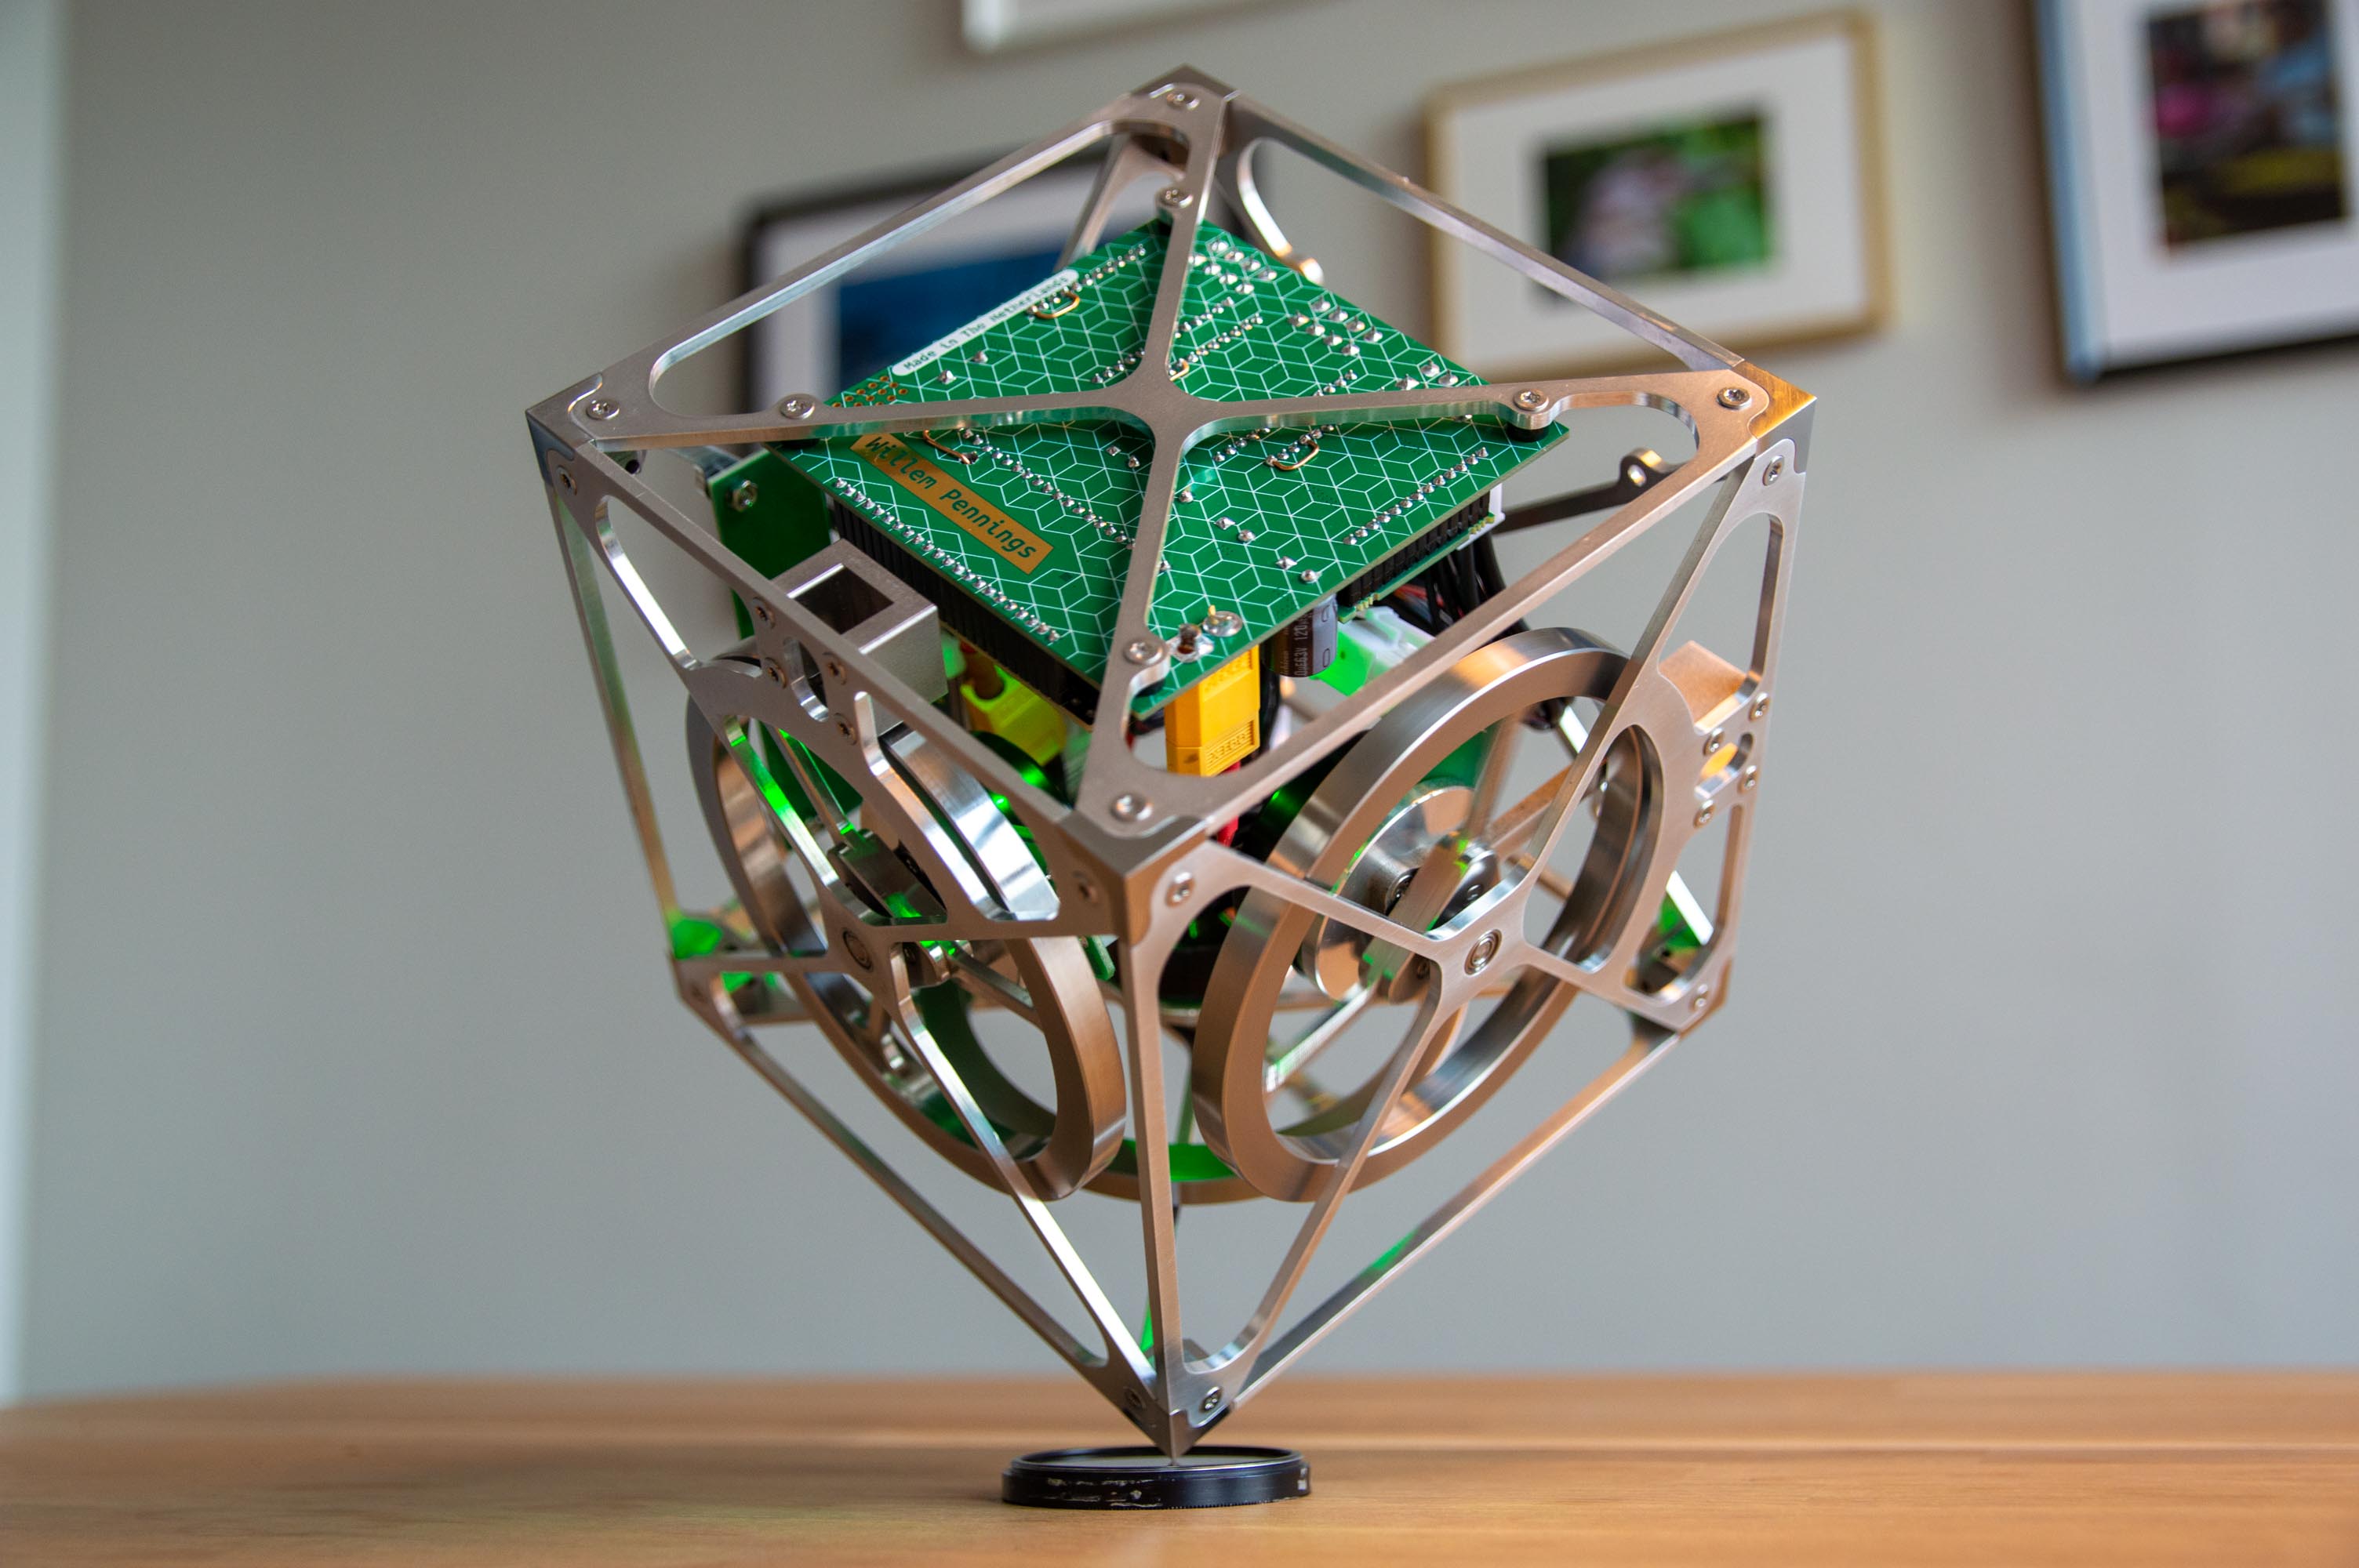 The cube balances on its corner using three integrated reaction wheels